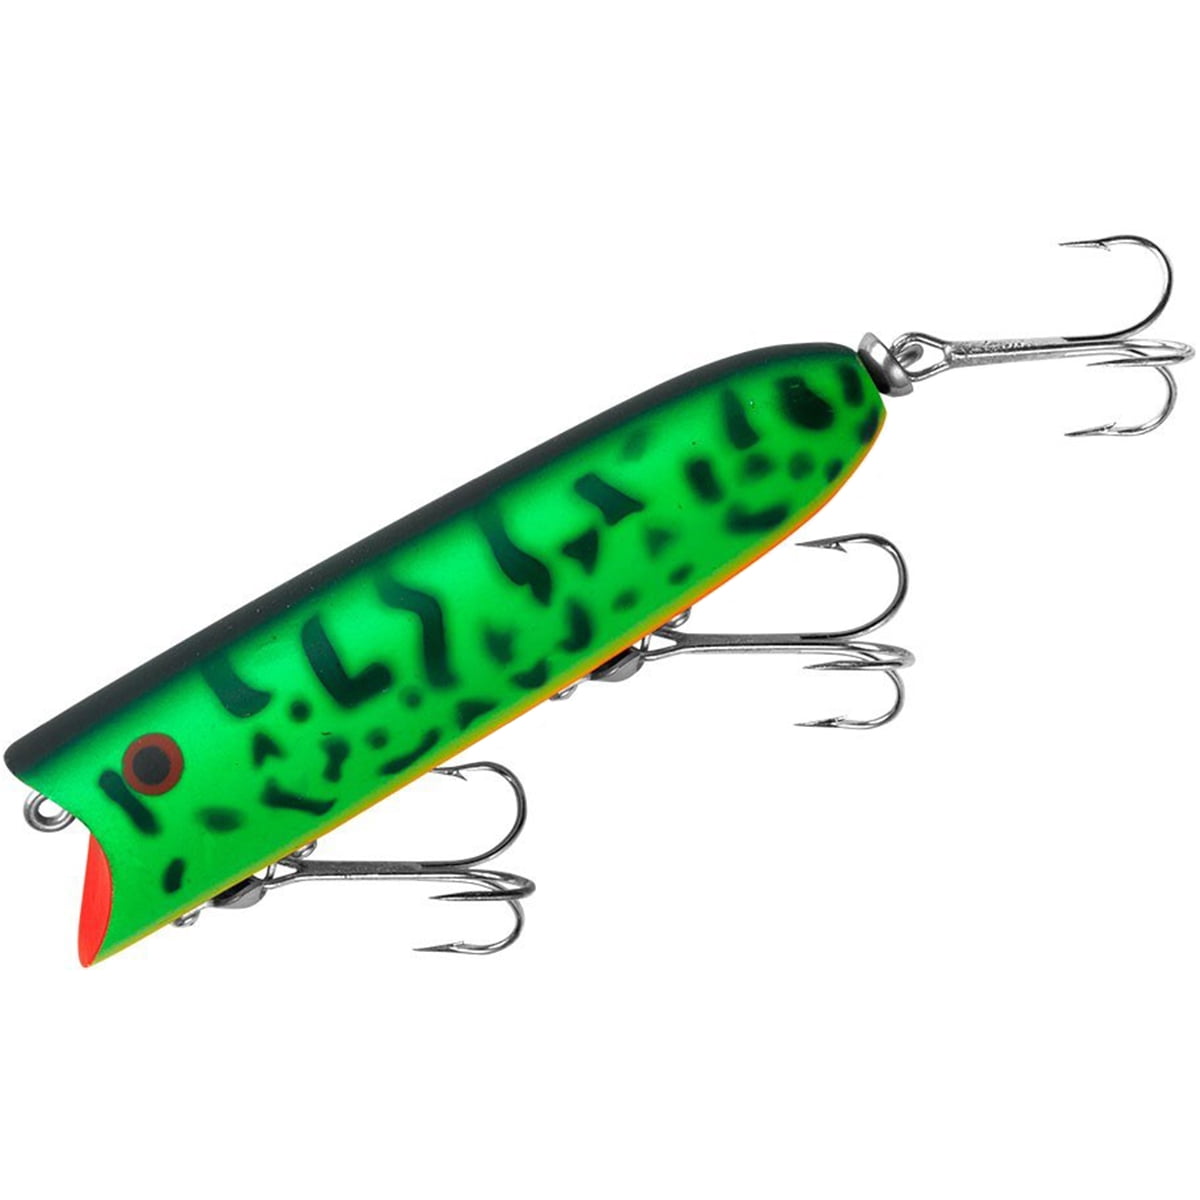 Heddon Lucky 13 5/8 oz Fishing Lure - Fluorescent Green Crawdad